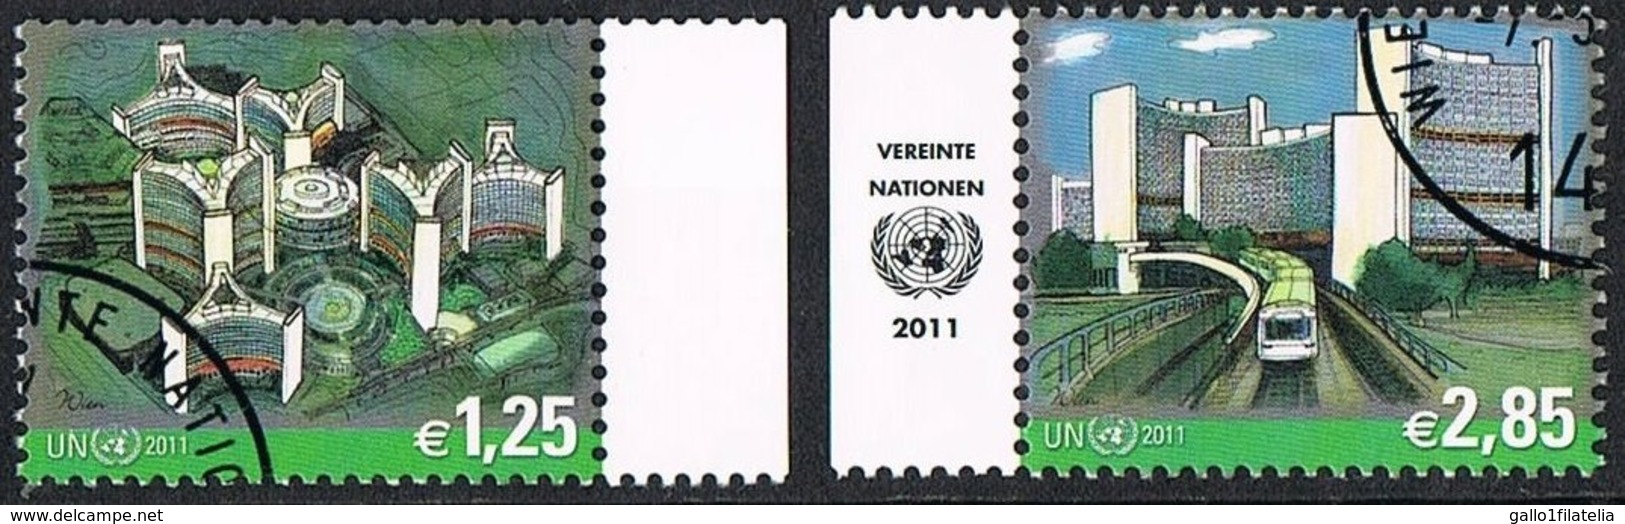 2011 - O.N.U. / UNITED NATIONS - VIENNA / WIEN - POSTA ORDINARIA / DEFINITIVE. USATO - Gebruikt